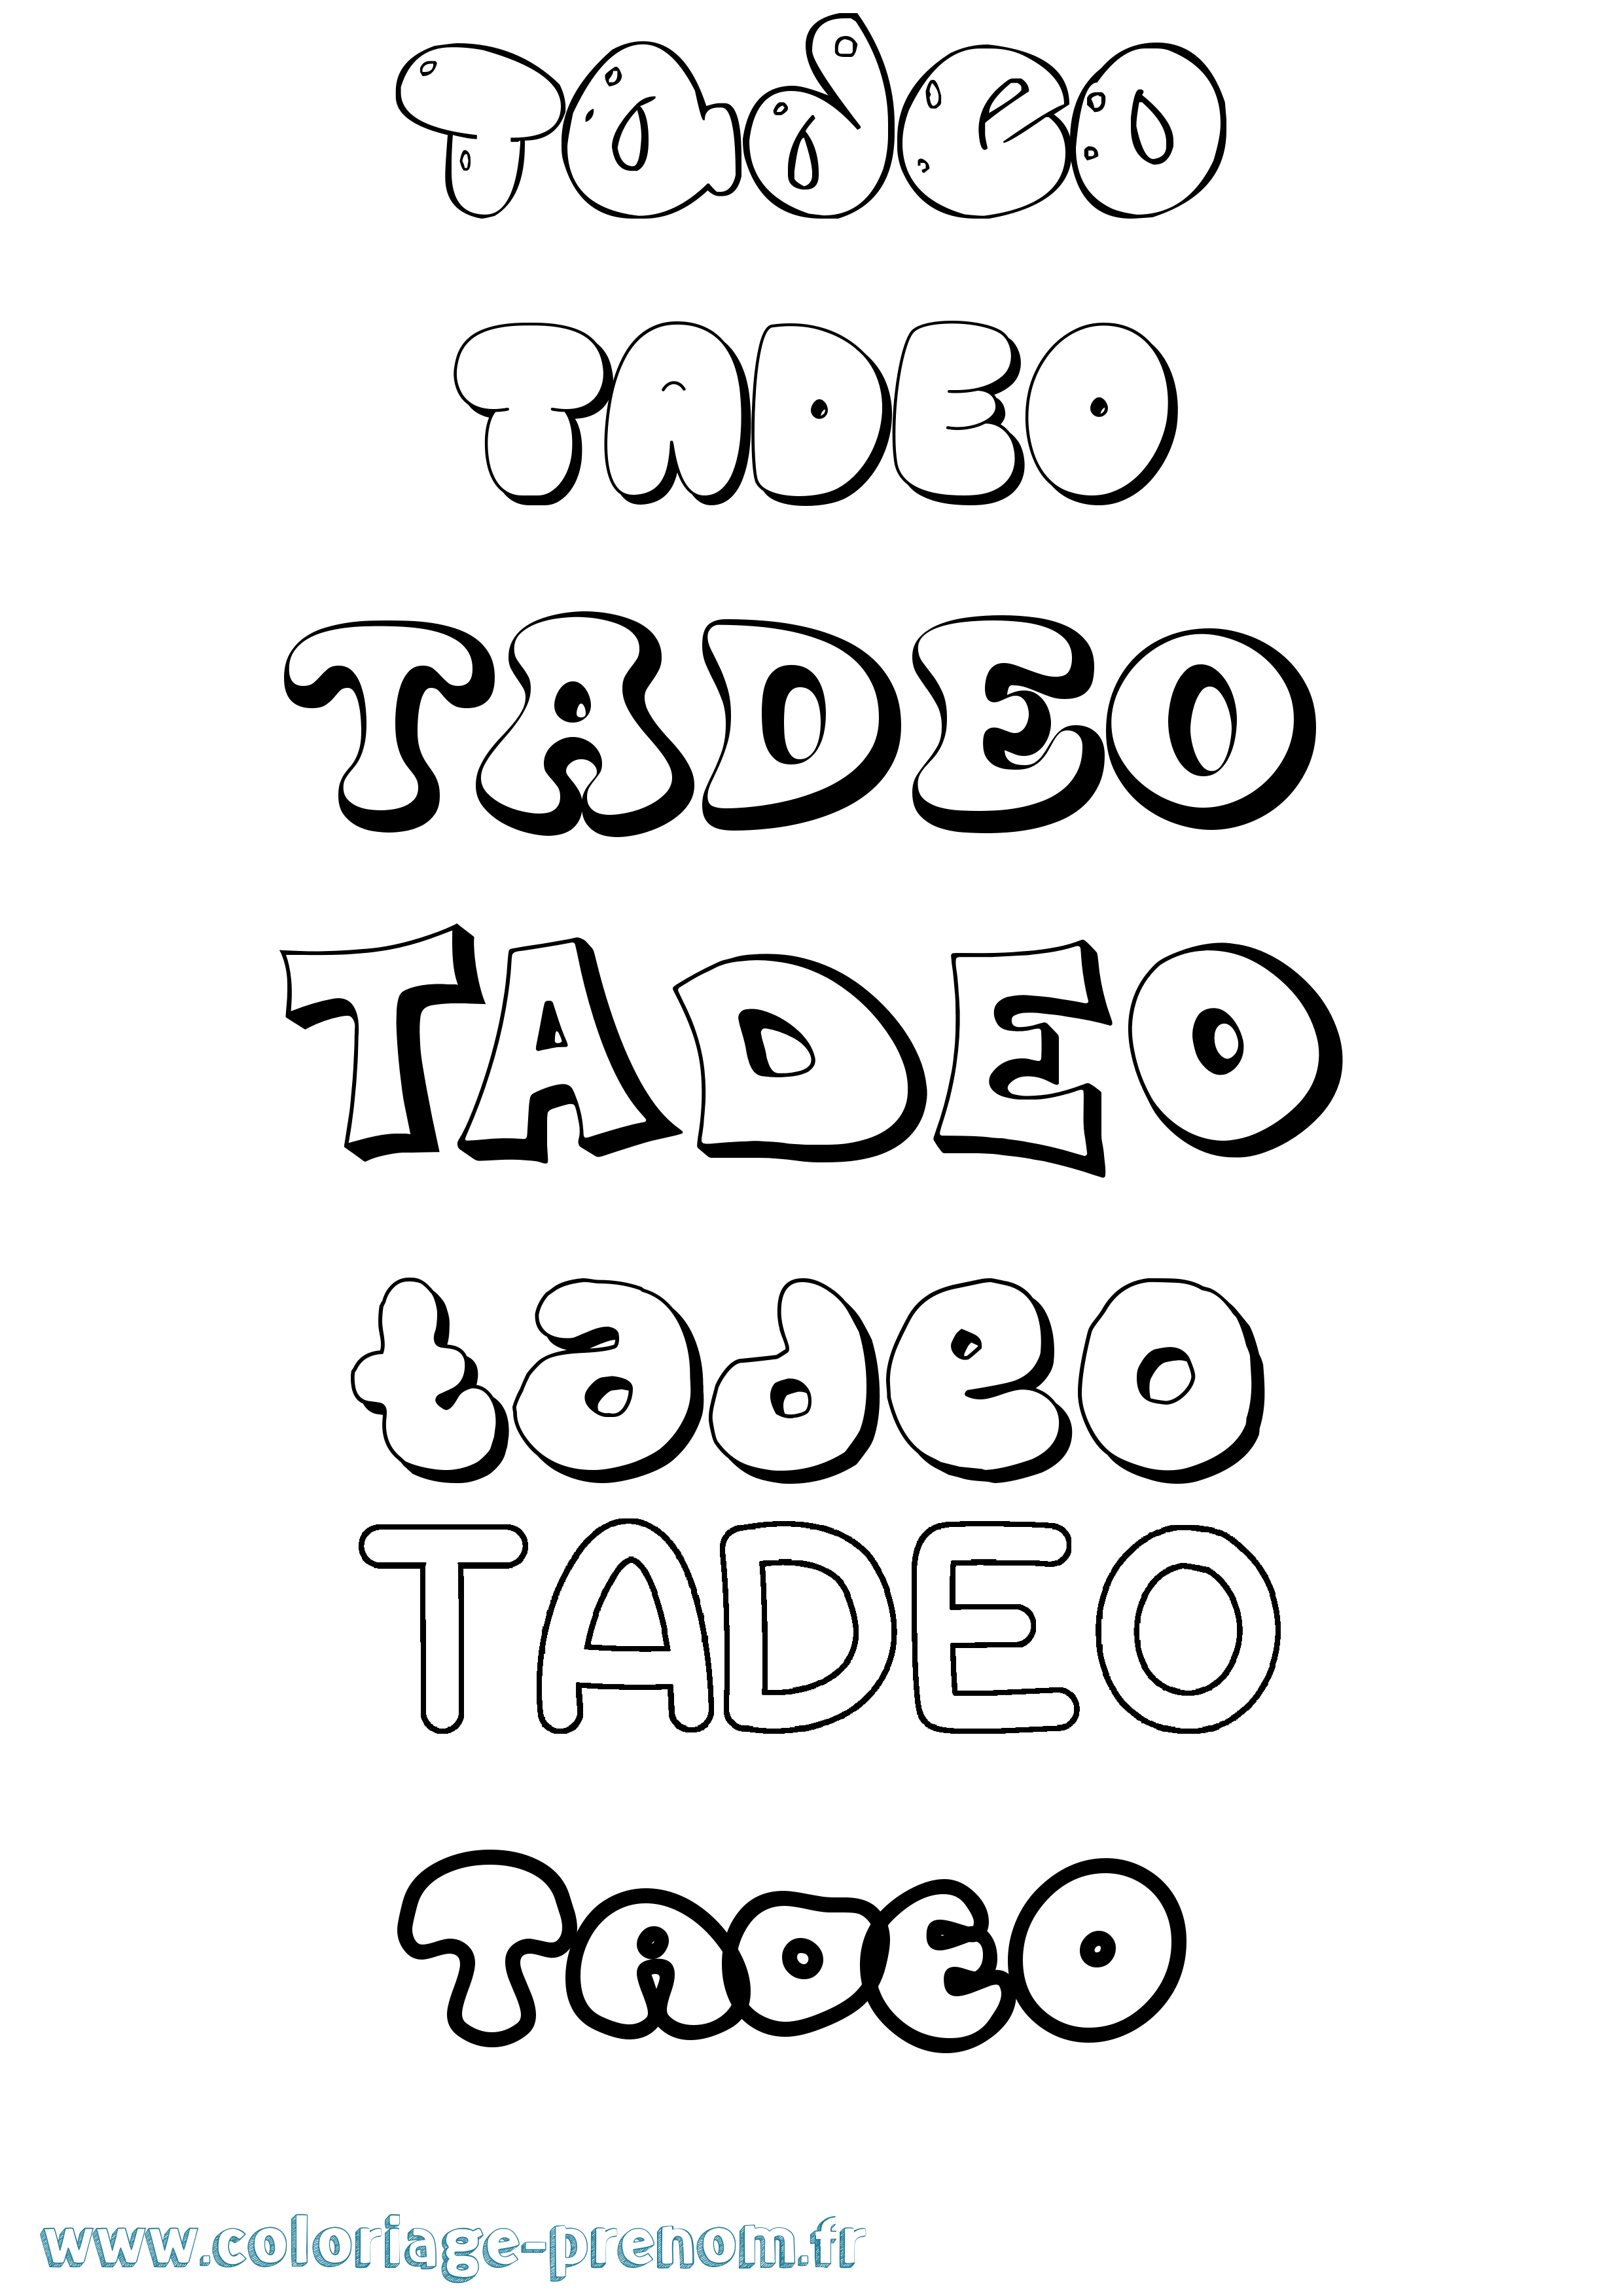 Coloriage prénom Tadeo Bubble